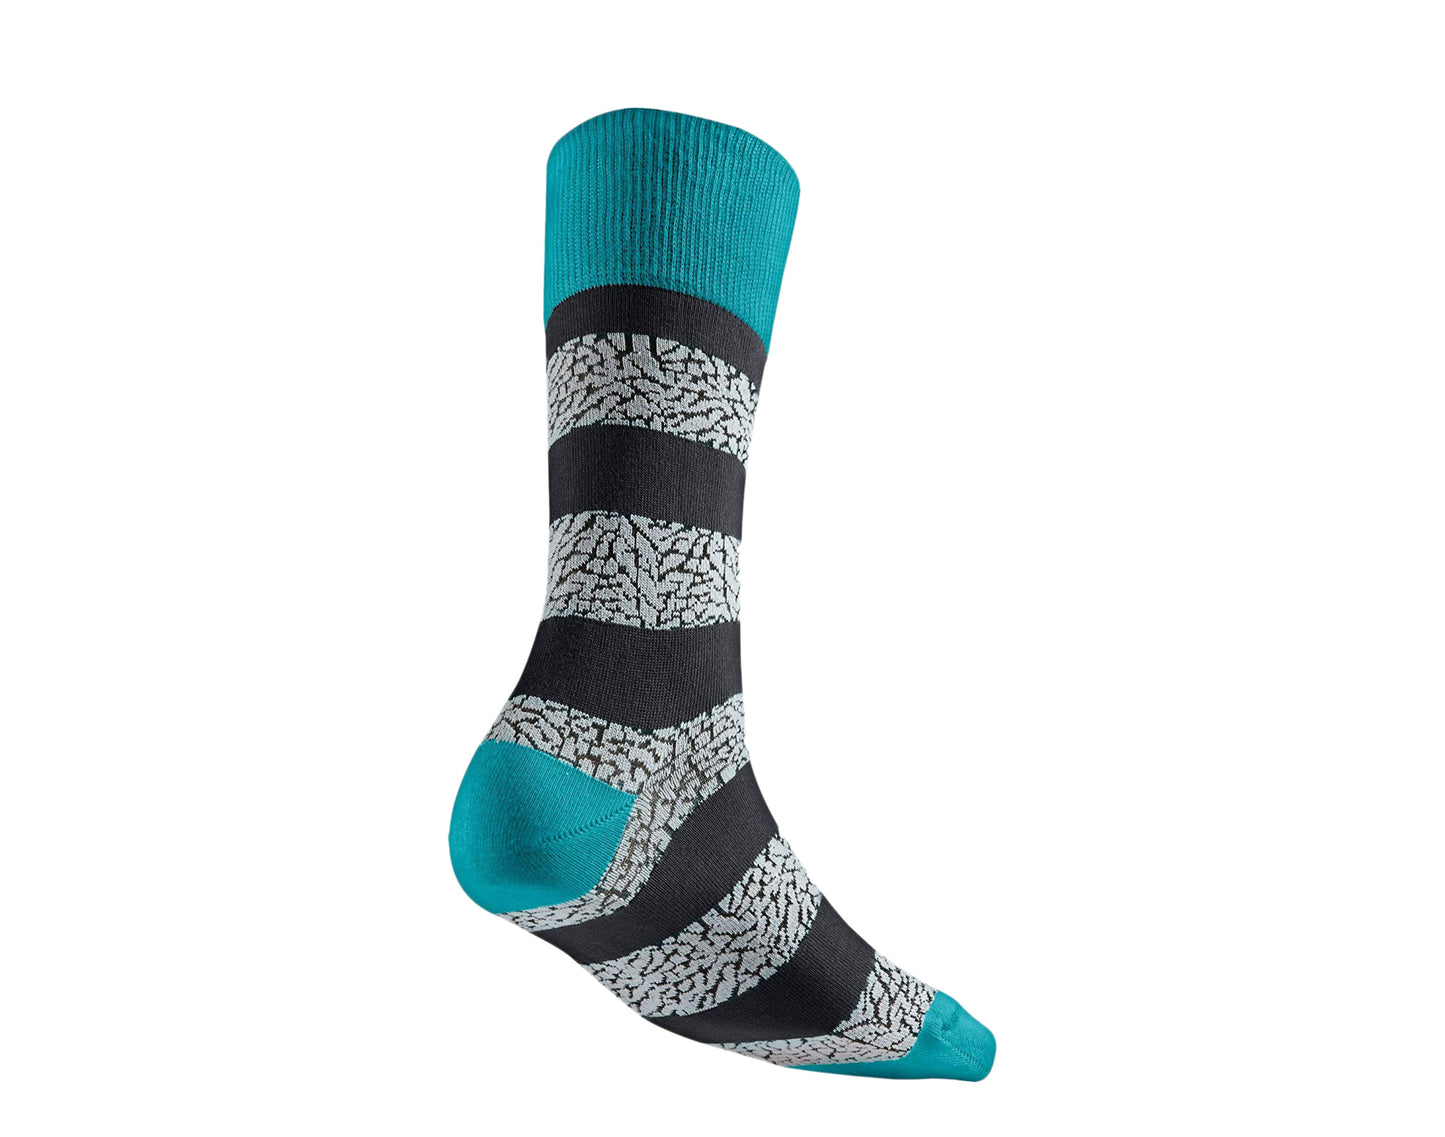 Nike Air Jordan Striped Elephant Print Crew Teal/Black Socks 647688-310